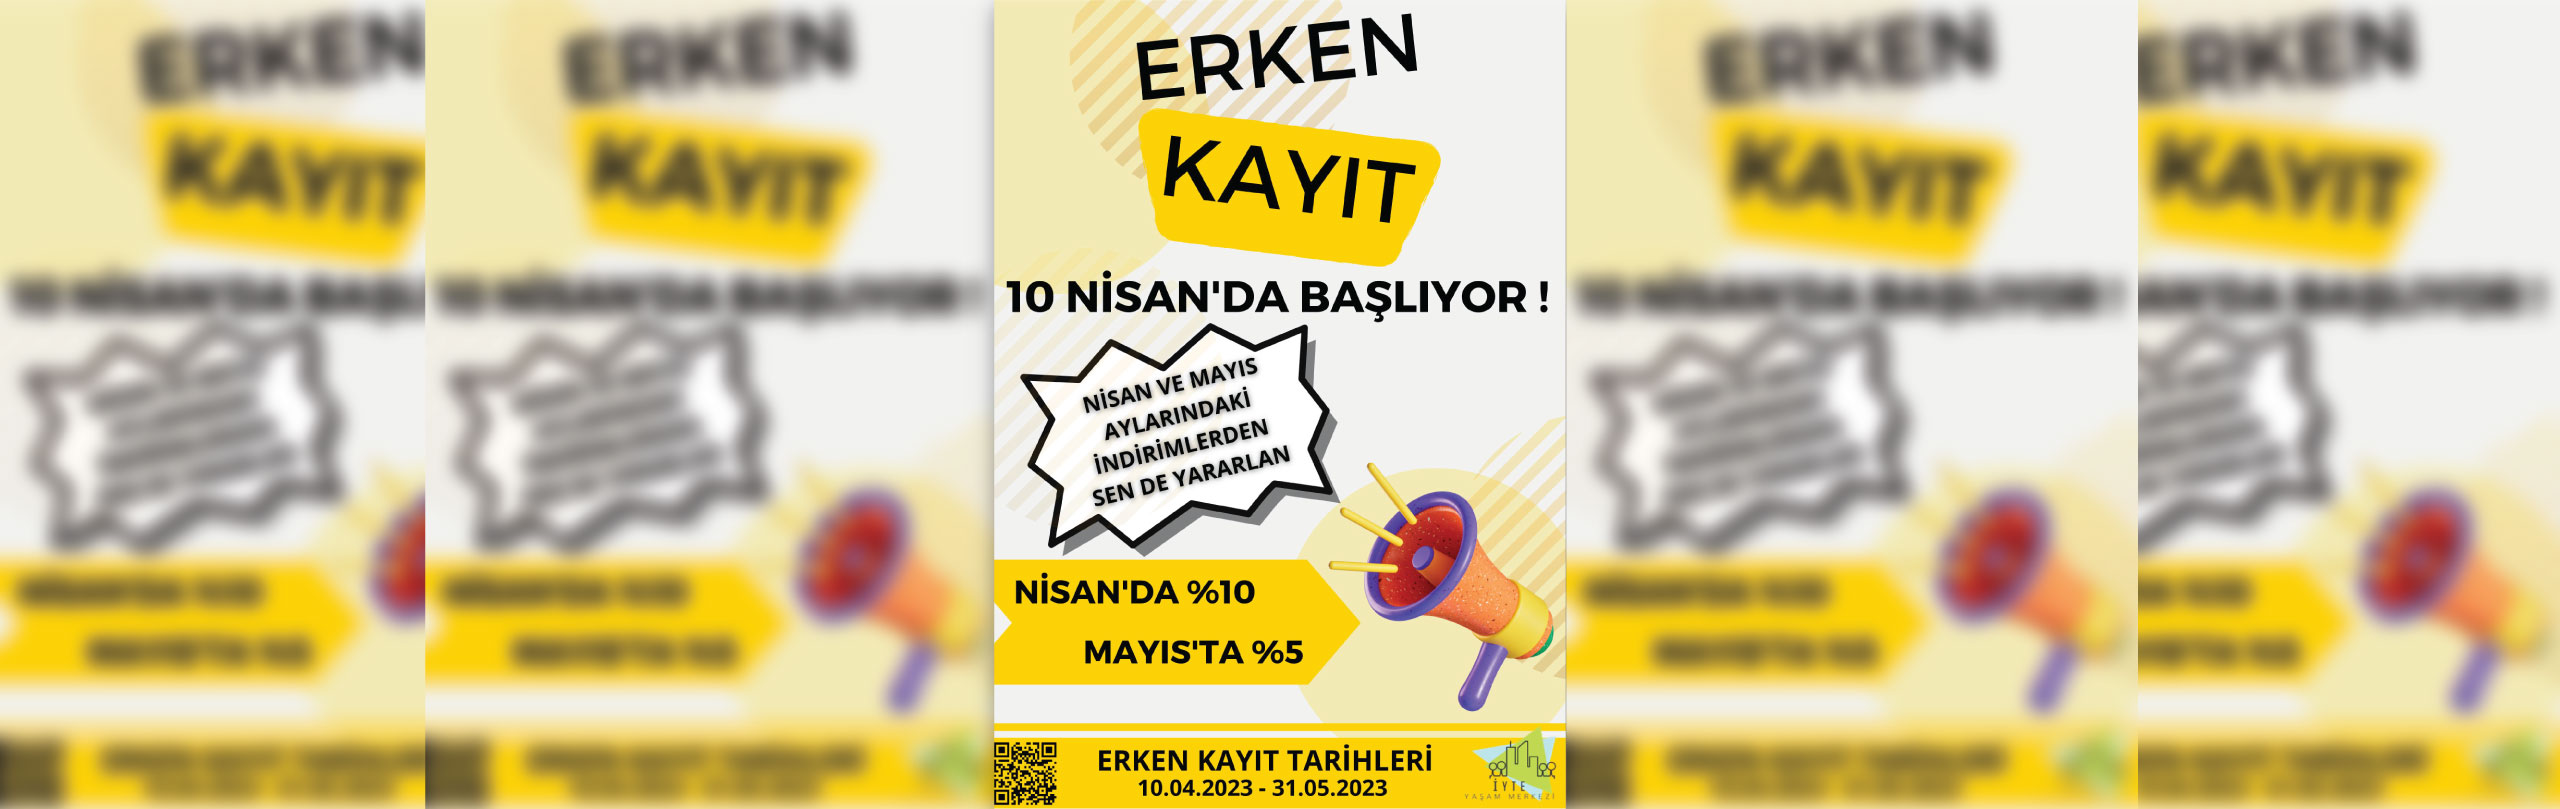 IYTE-Erken-Kayit-slider